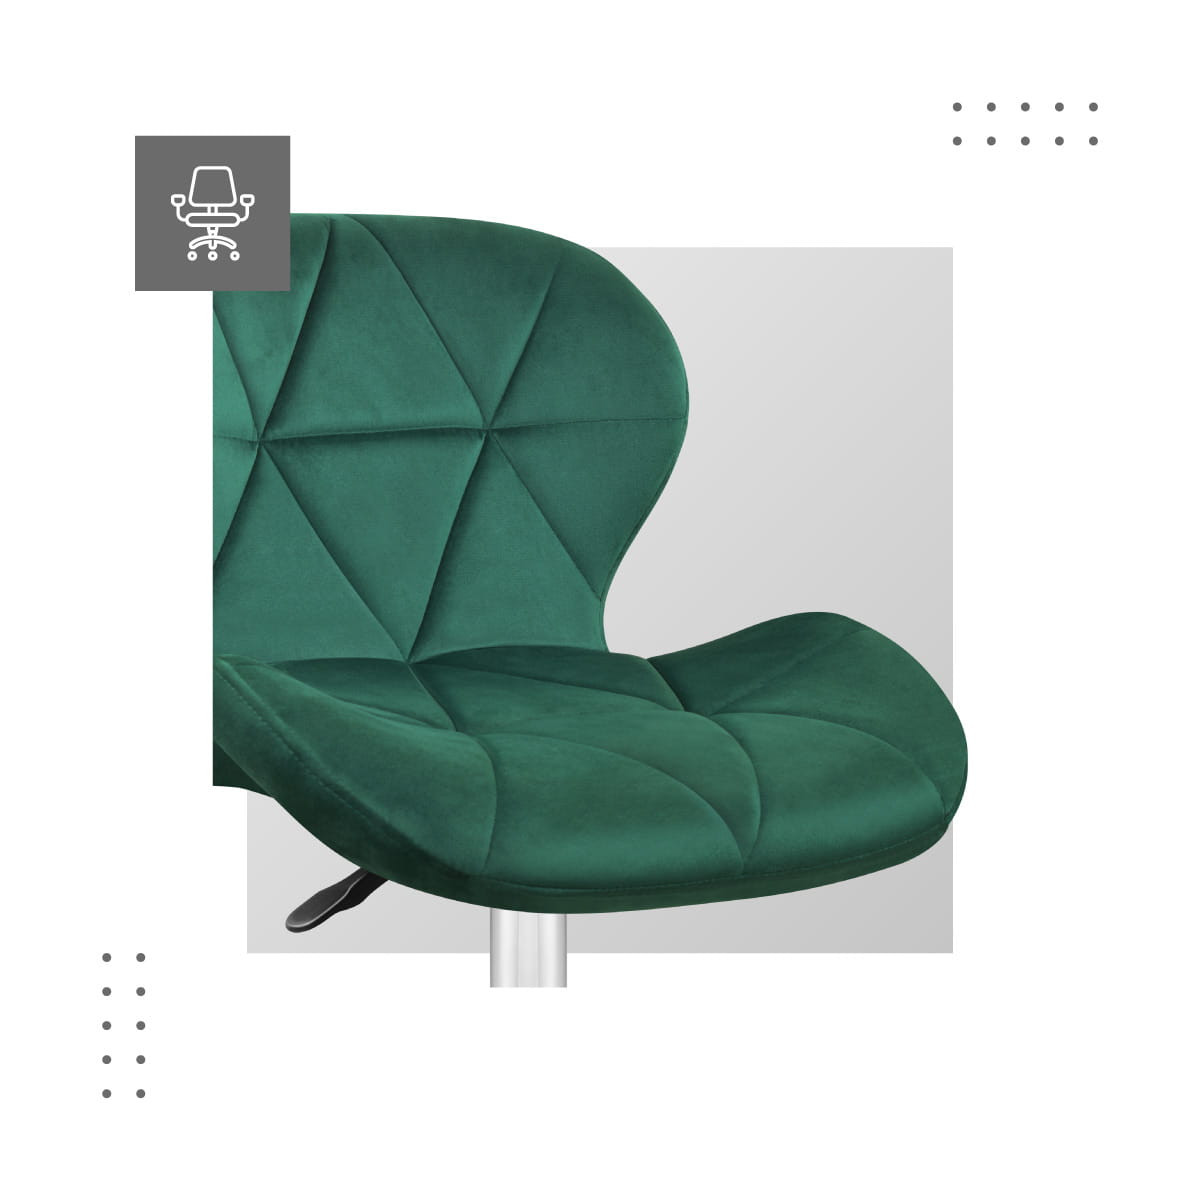 Kancelářská židle Mark Adler - Future 3.0 Green Velur